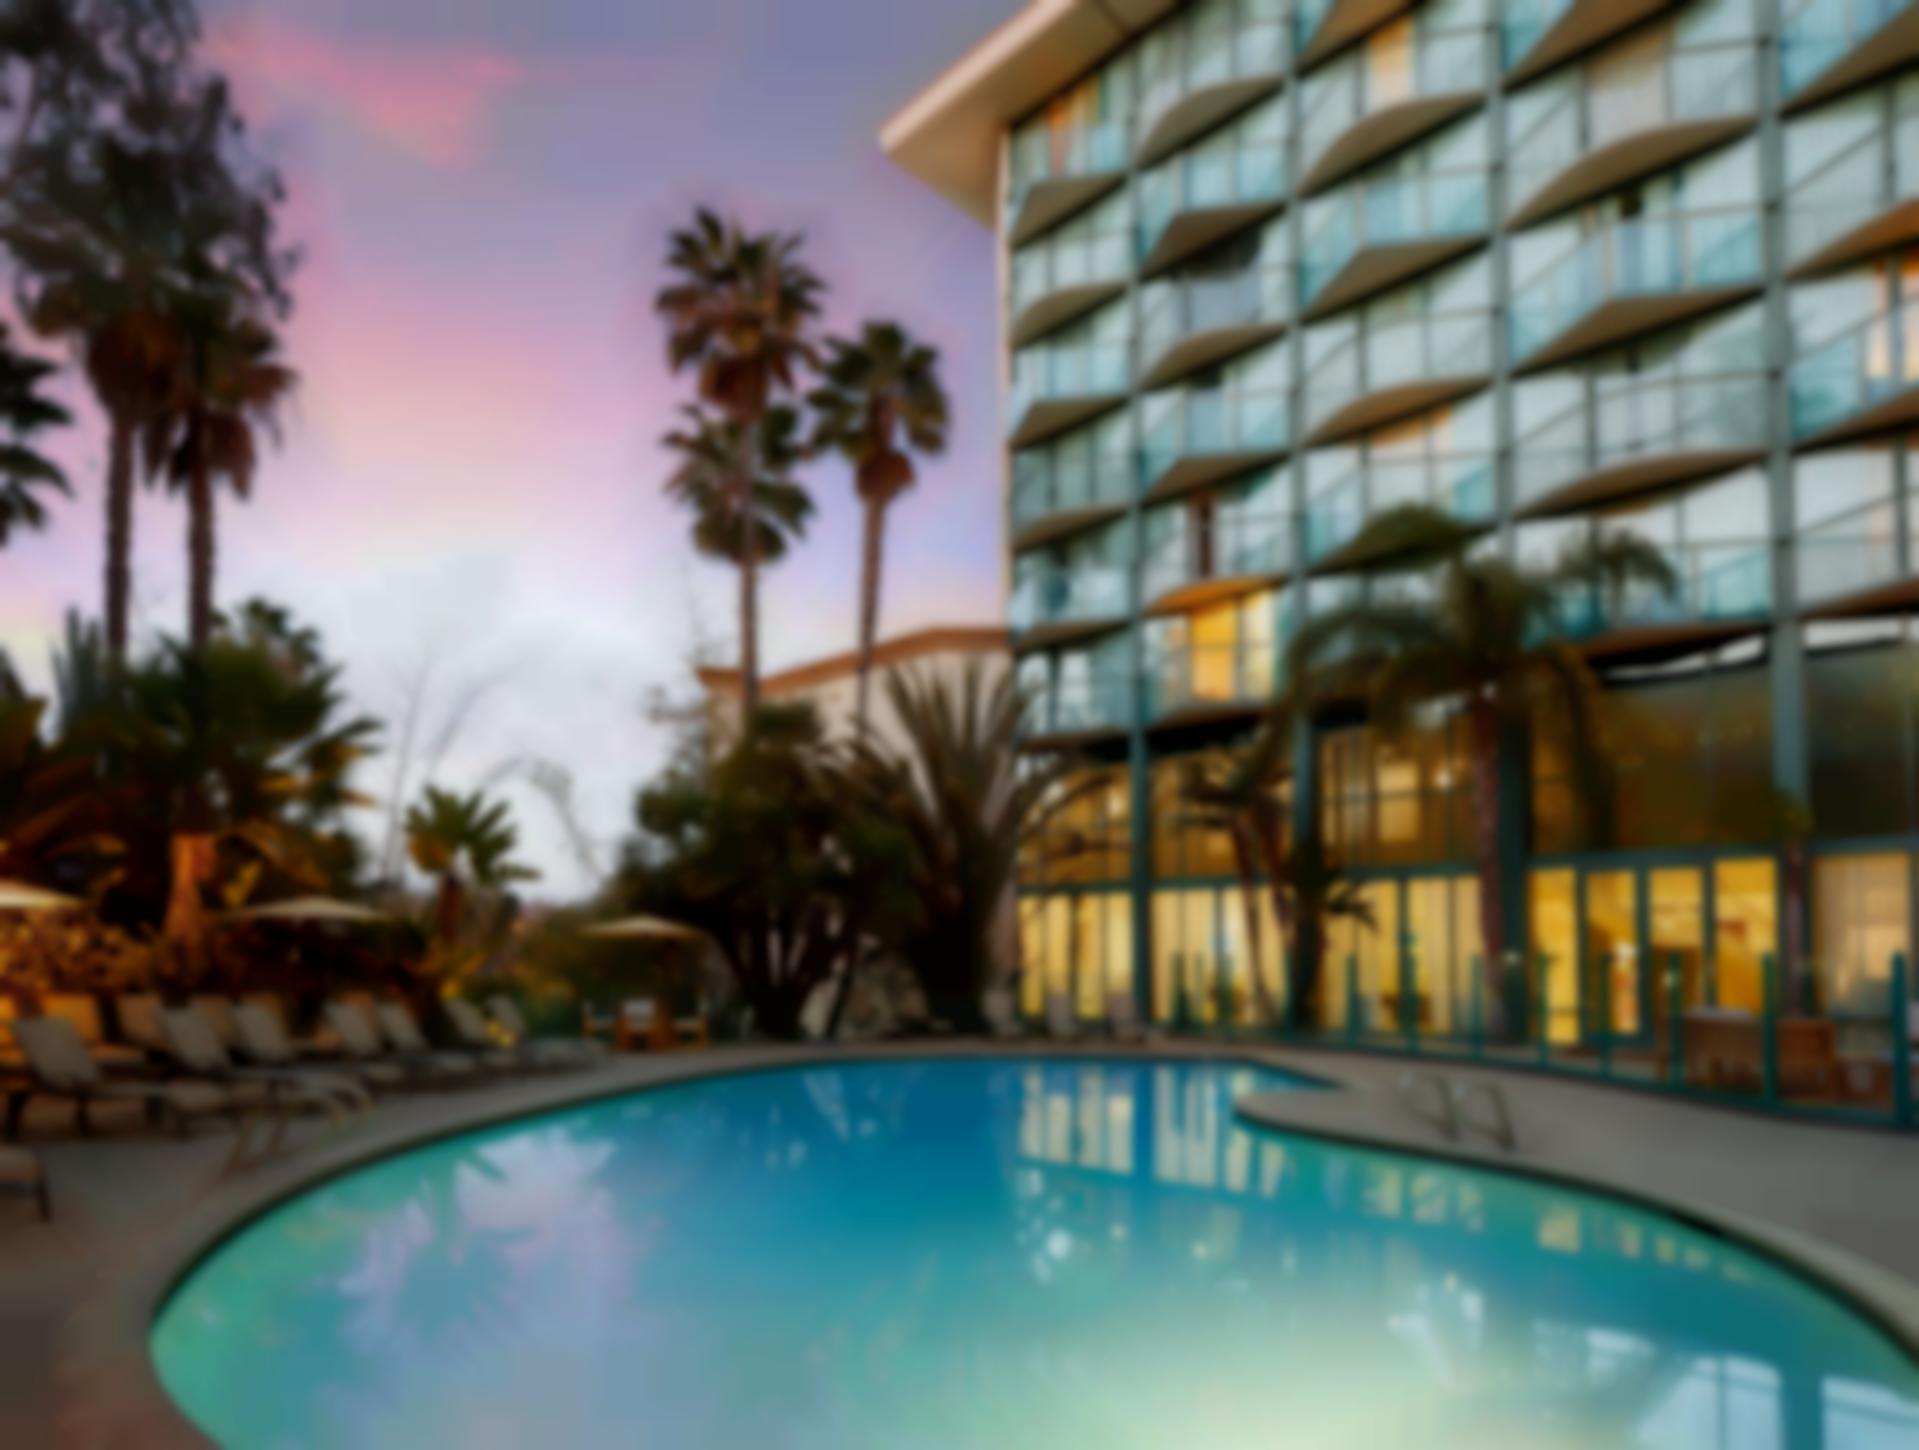 DoubleTree by Hilton San Diego - Hotel Circle